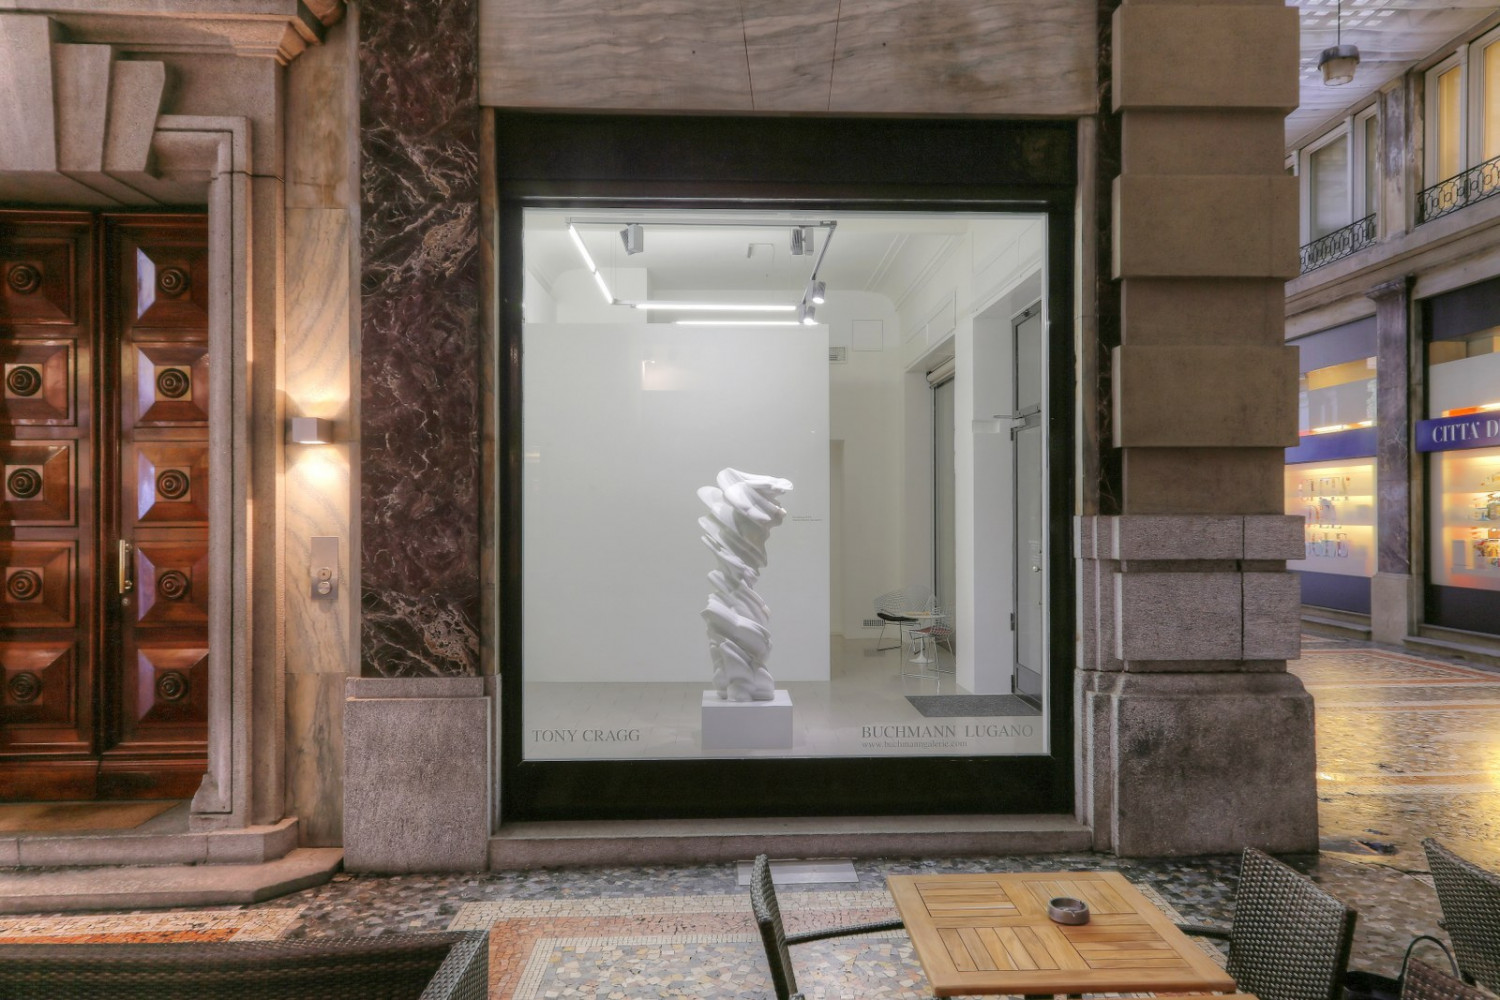 Tony Cragg, Installation view, Buchmann Lugano, 2015